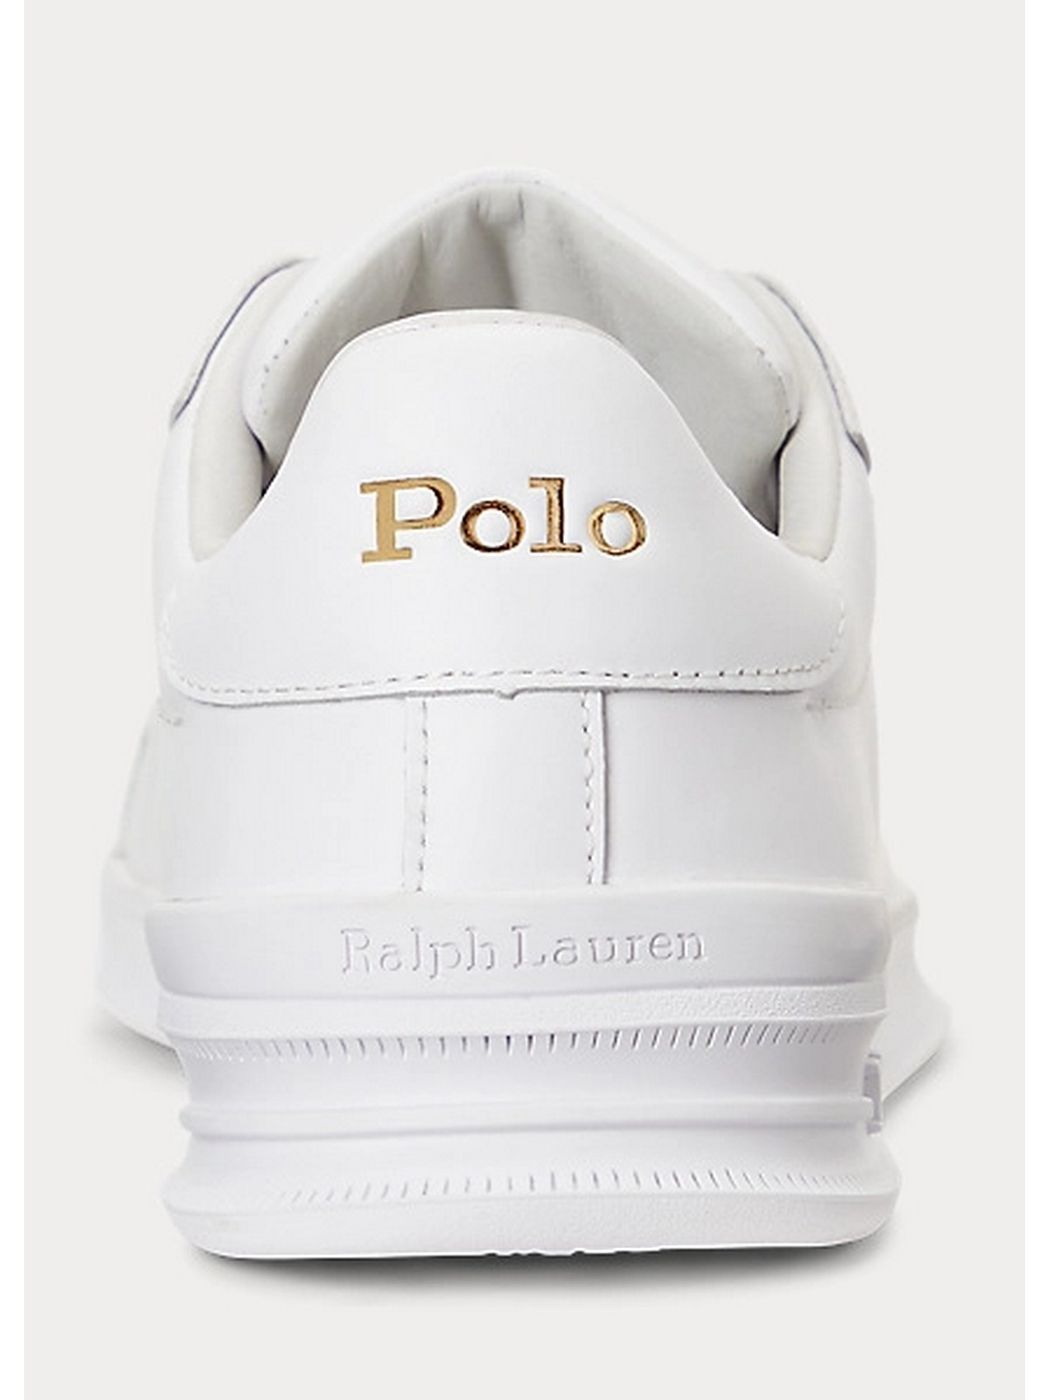 POLO RALPH LAUREN Sneaker Uomo Hrt ct II 809845110 002 Bianco